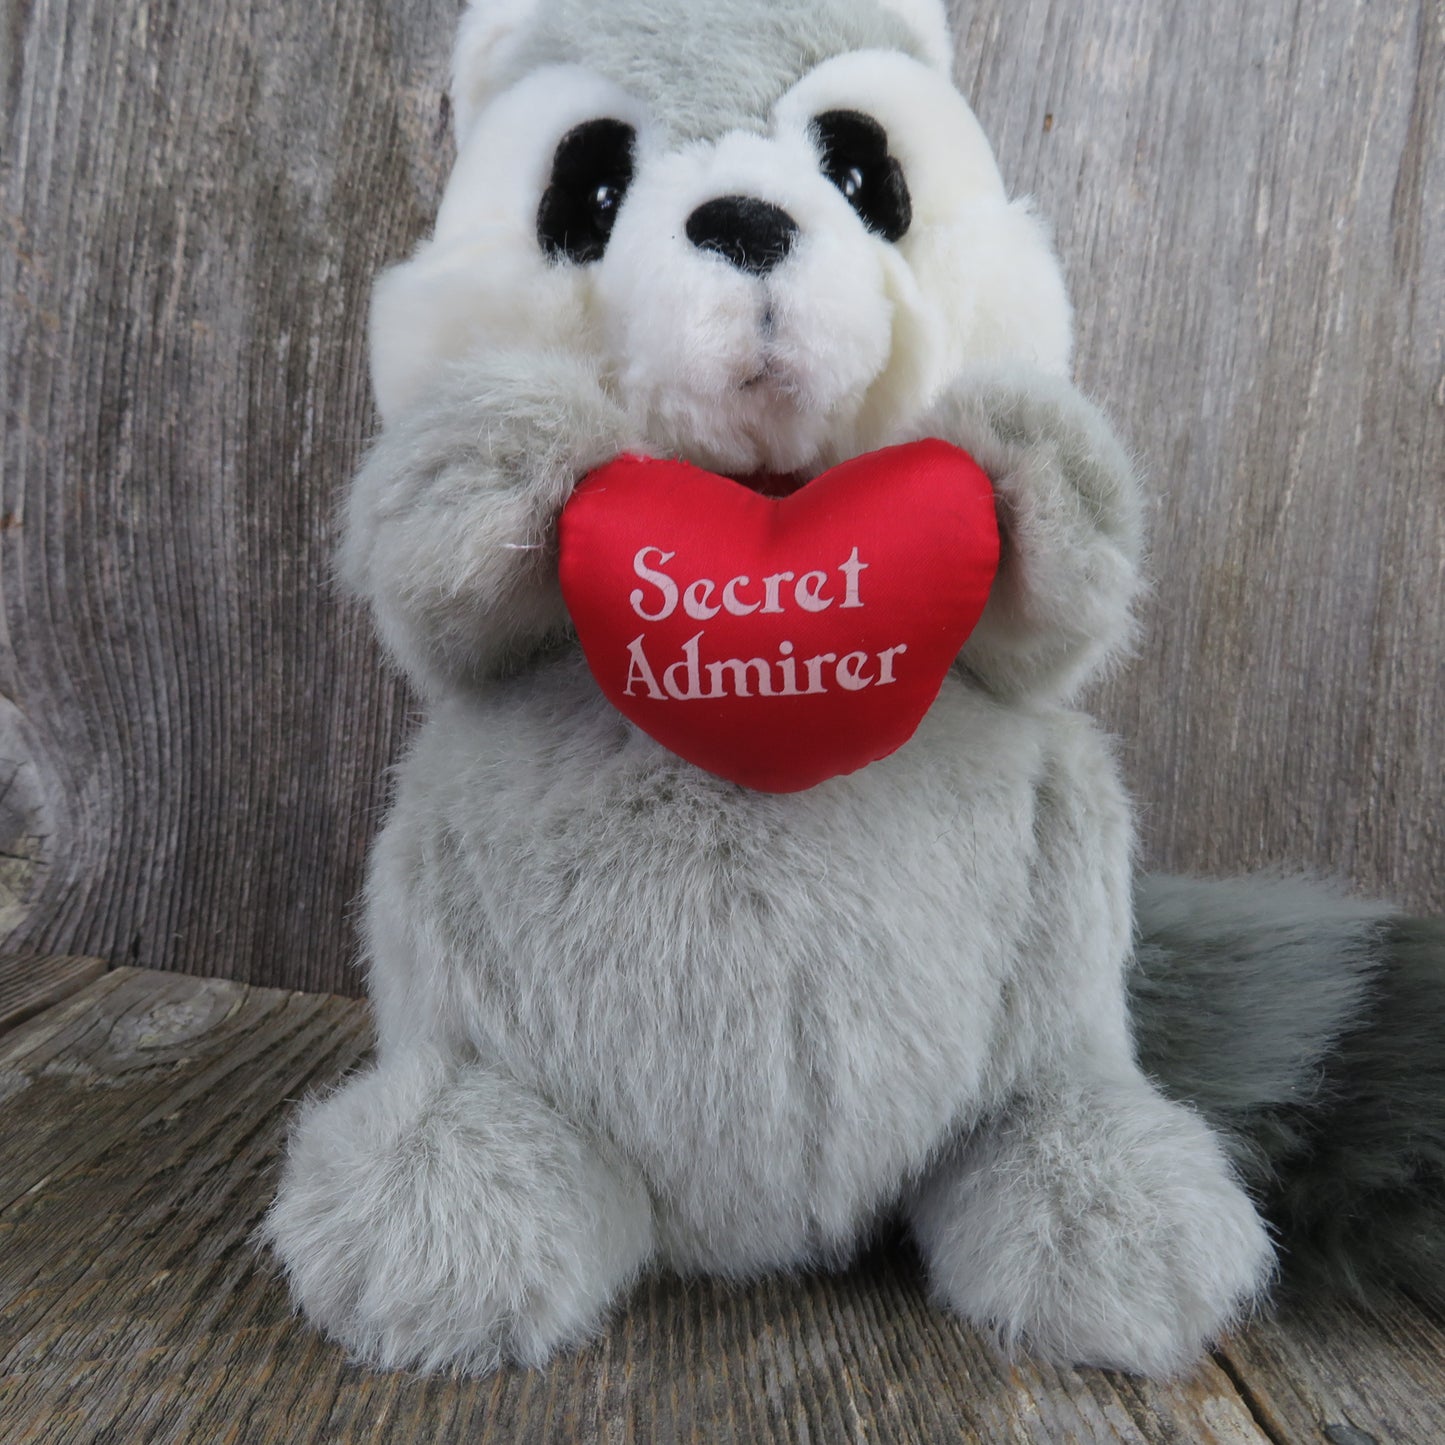 Vintage Raccoon Plush Valentines Heart Secret Admirer Stuffed Animal Gray by Dakin 1994 Grey Black - At Grandma's Table